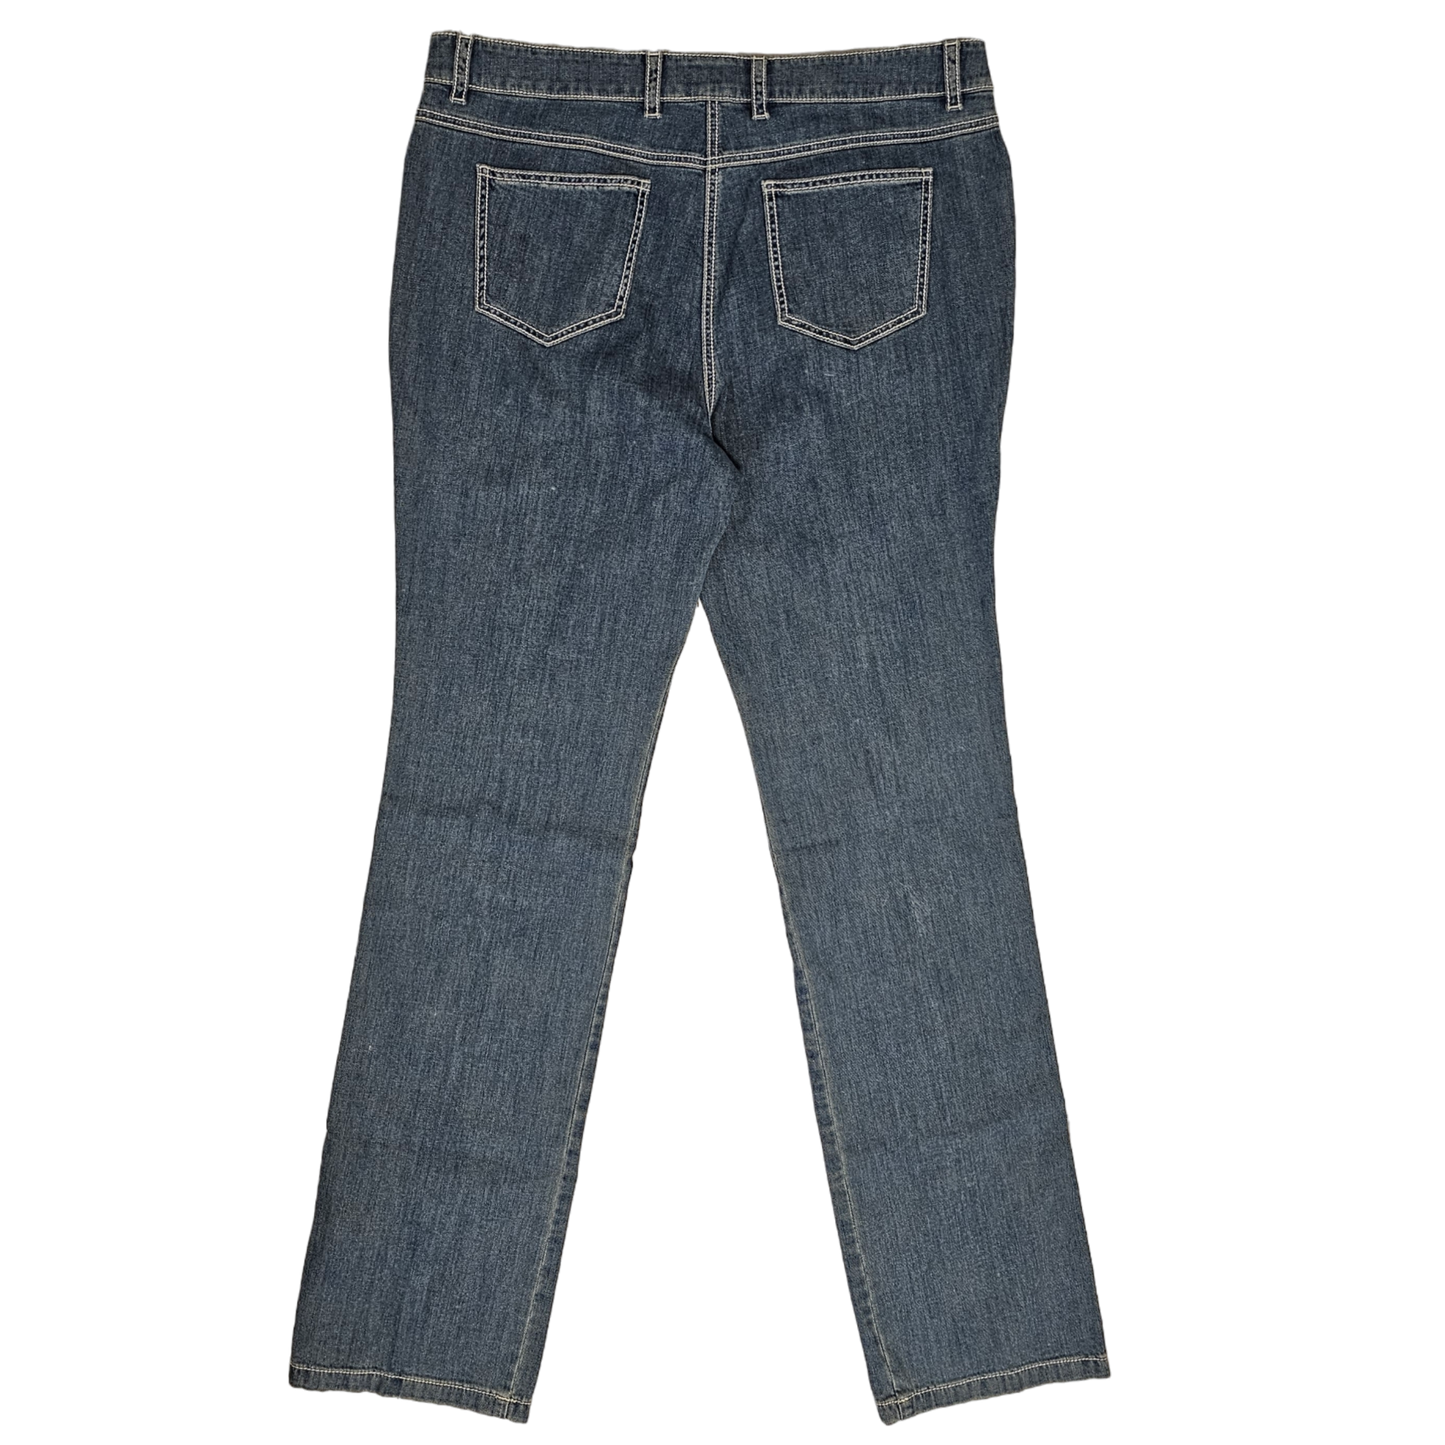 Jeans Designer By Escada  Size: L